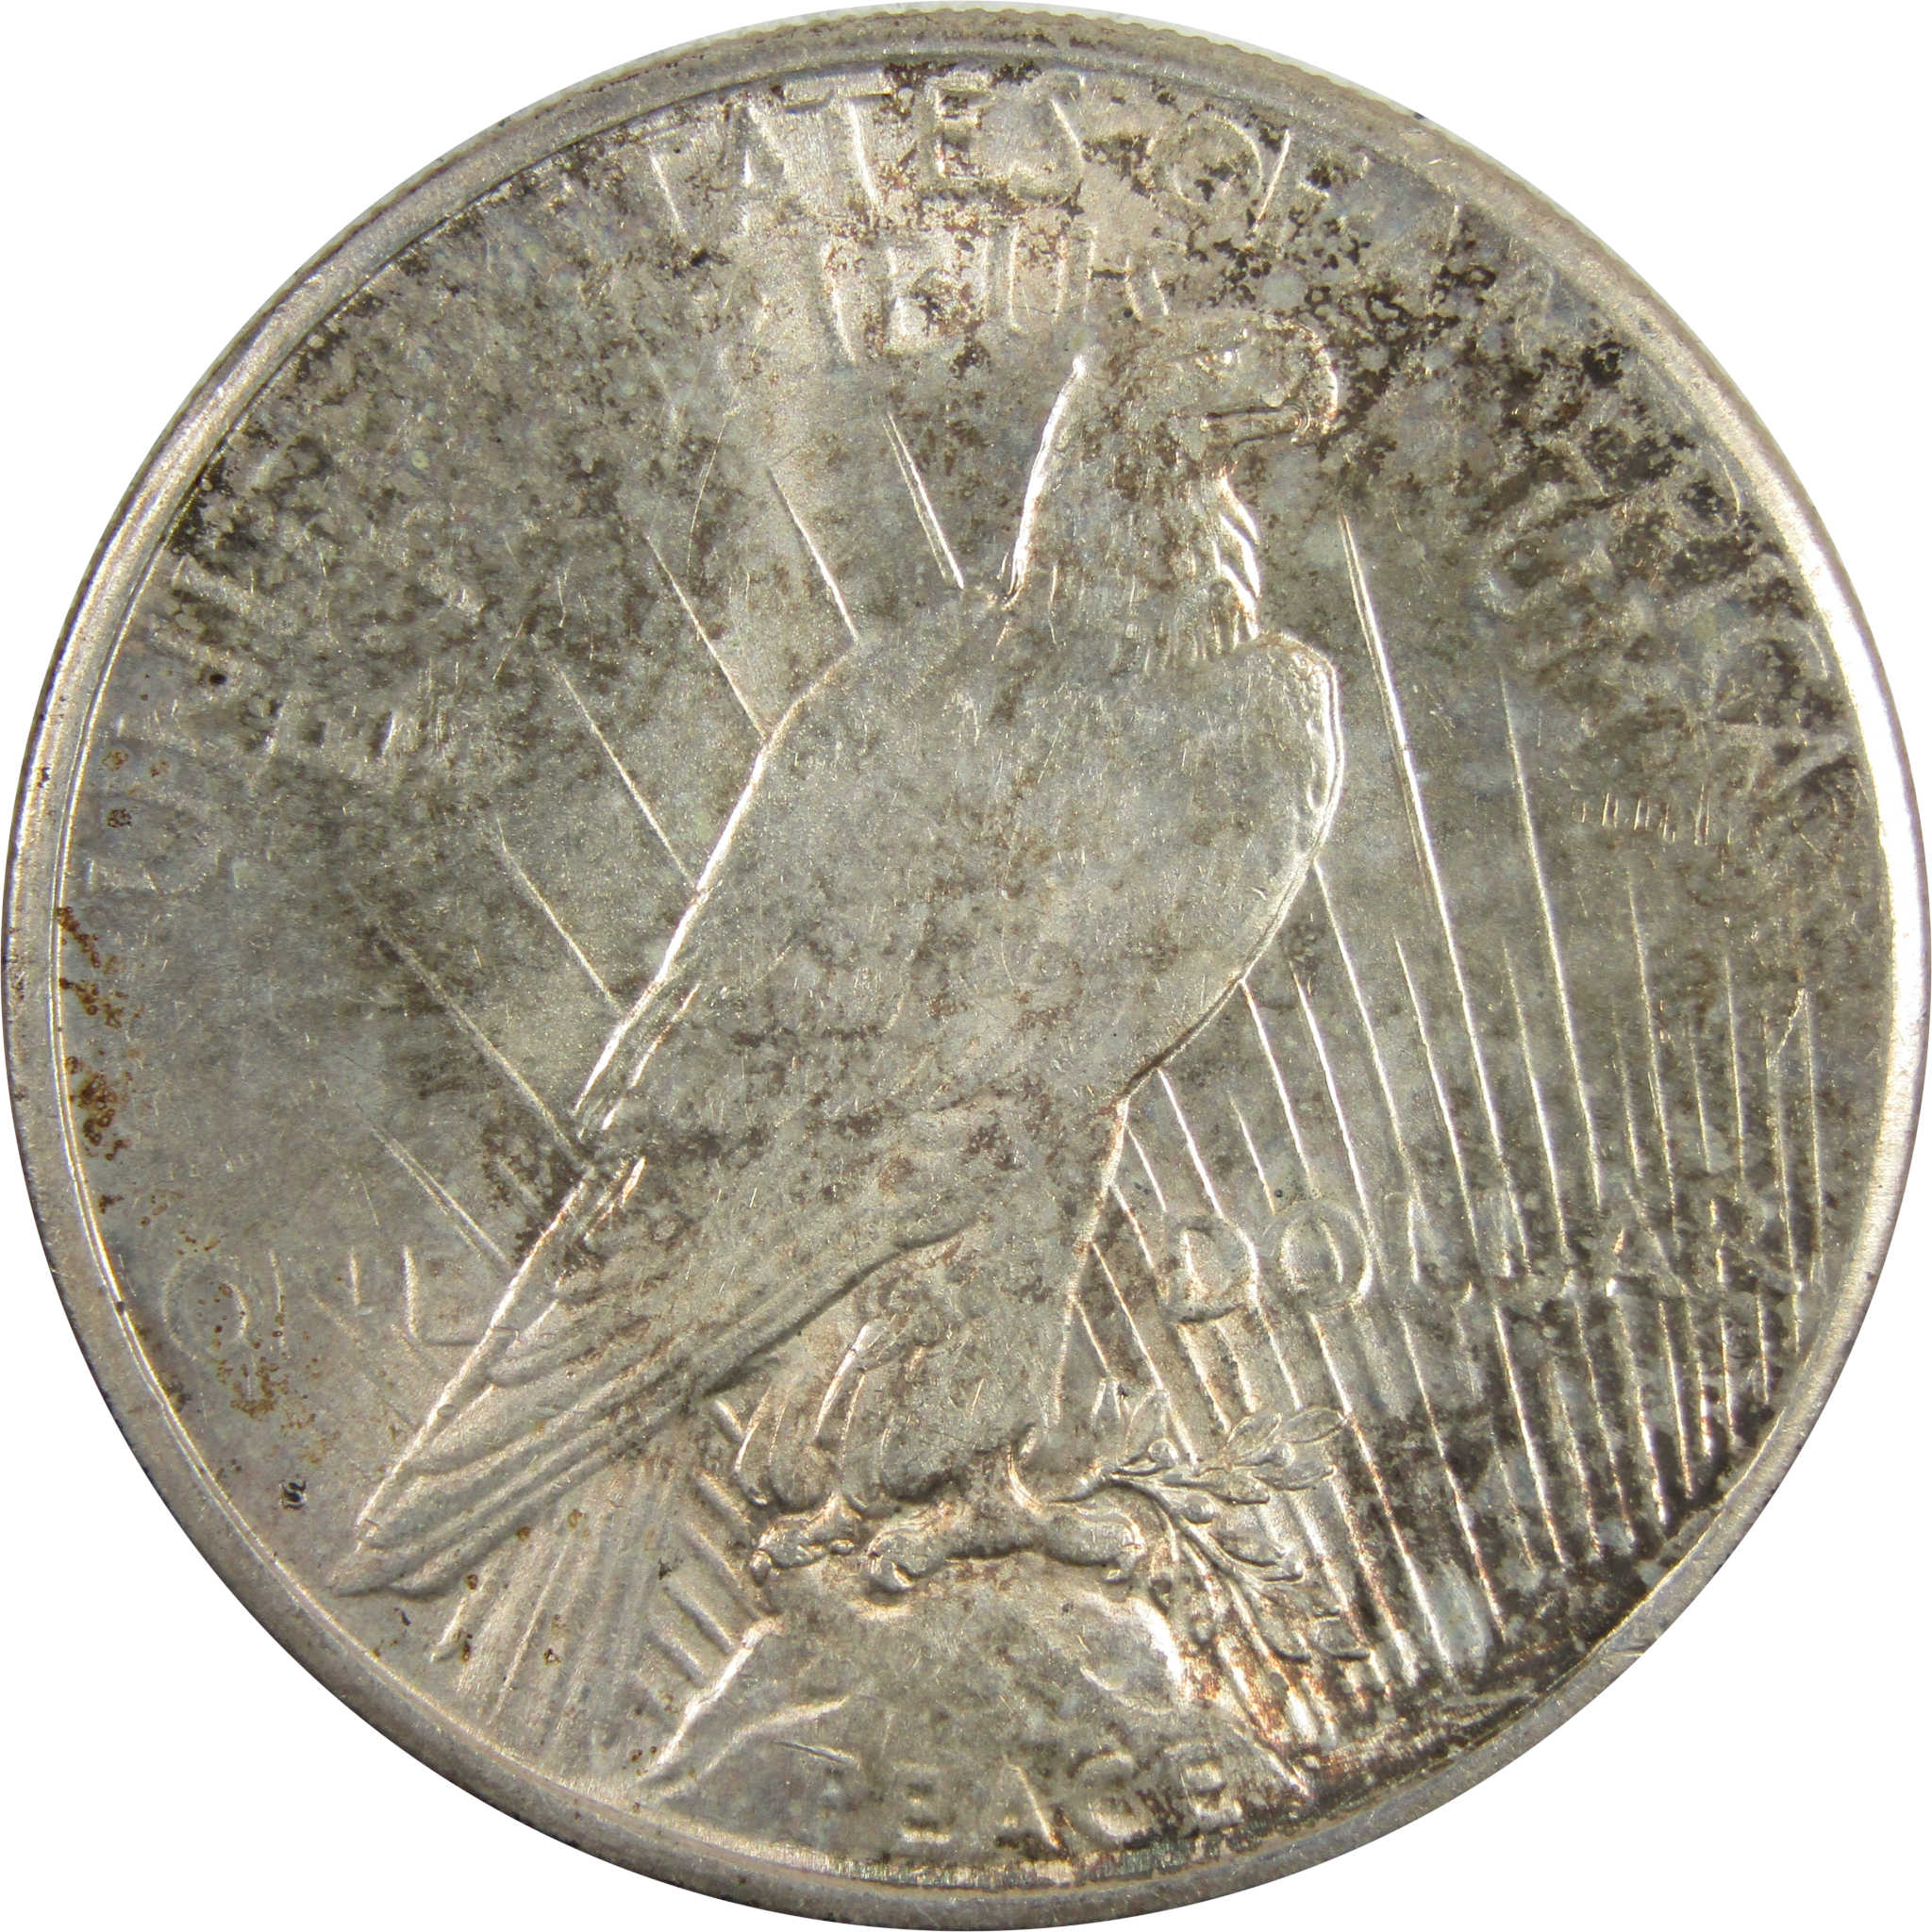 1922 S Peace Dollar Borderline Uncirculated Silver $1 Coin SKU:I5599